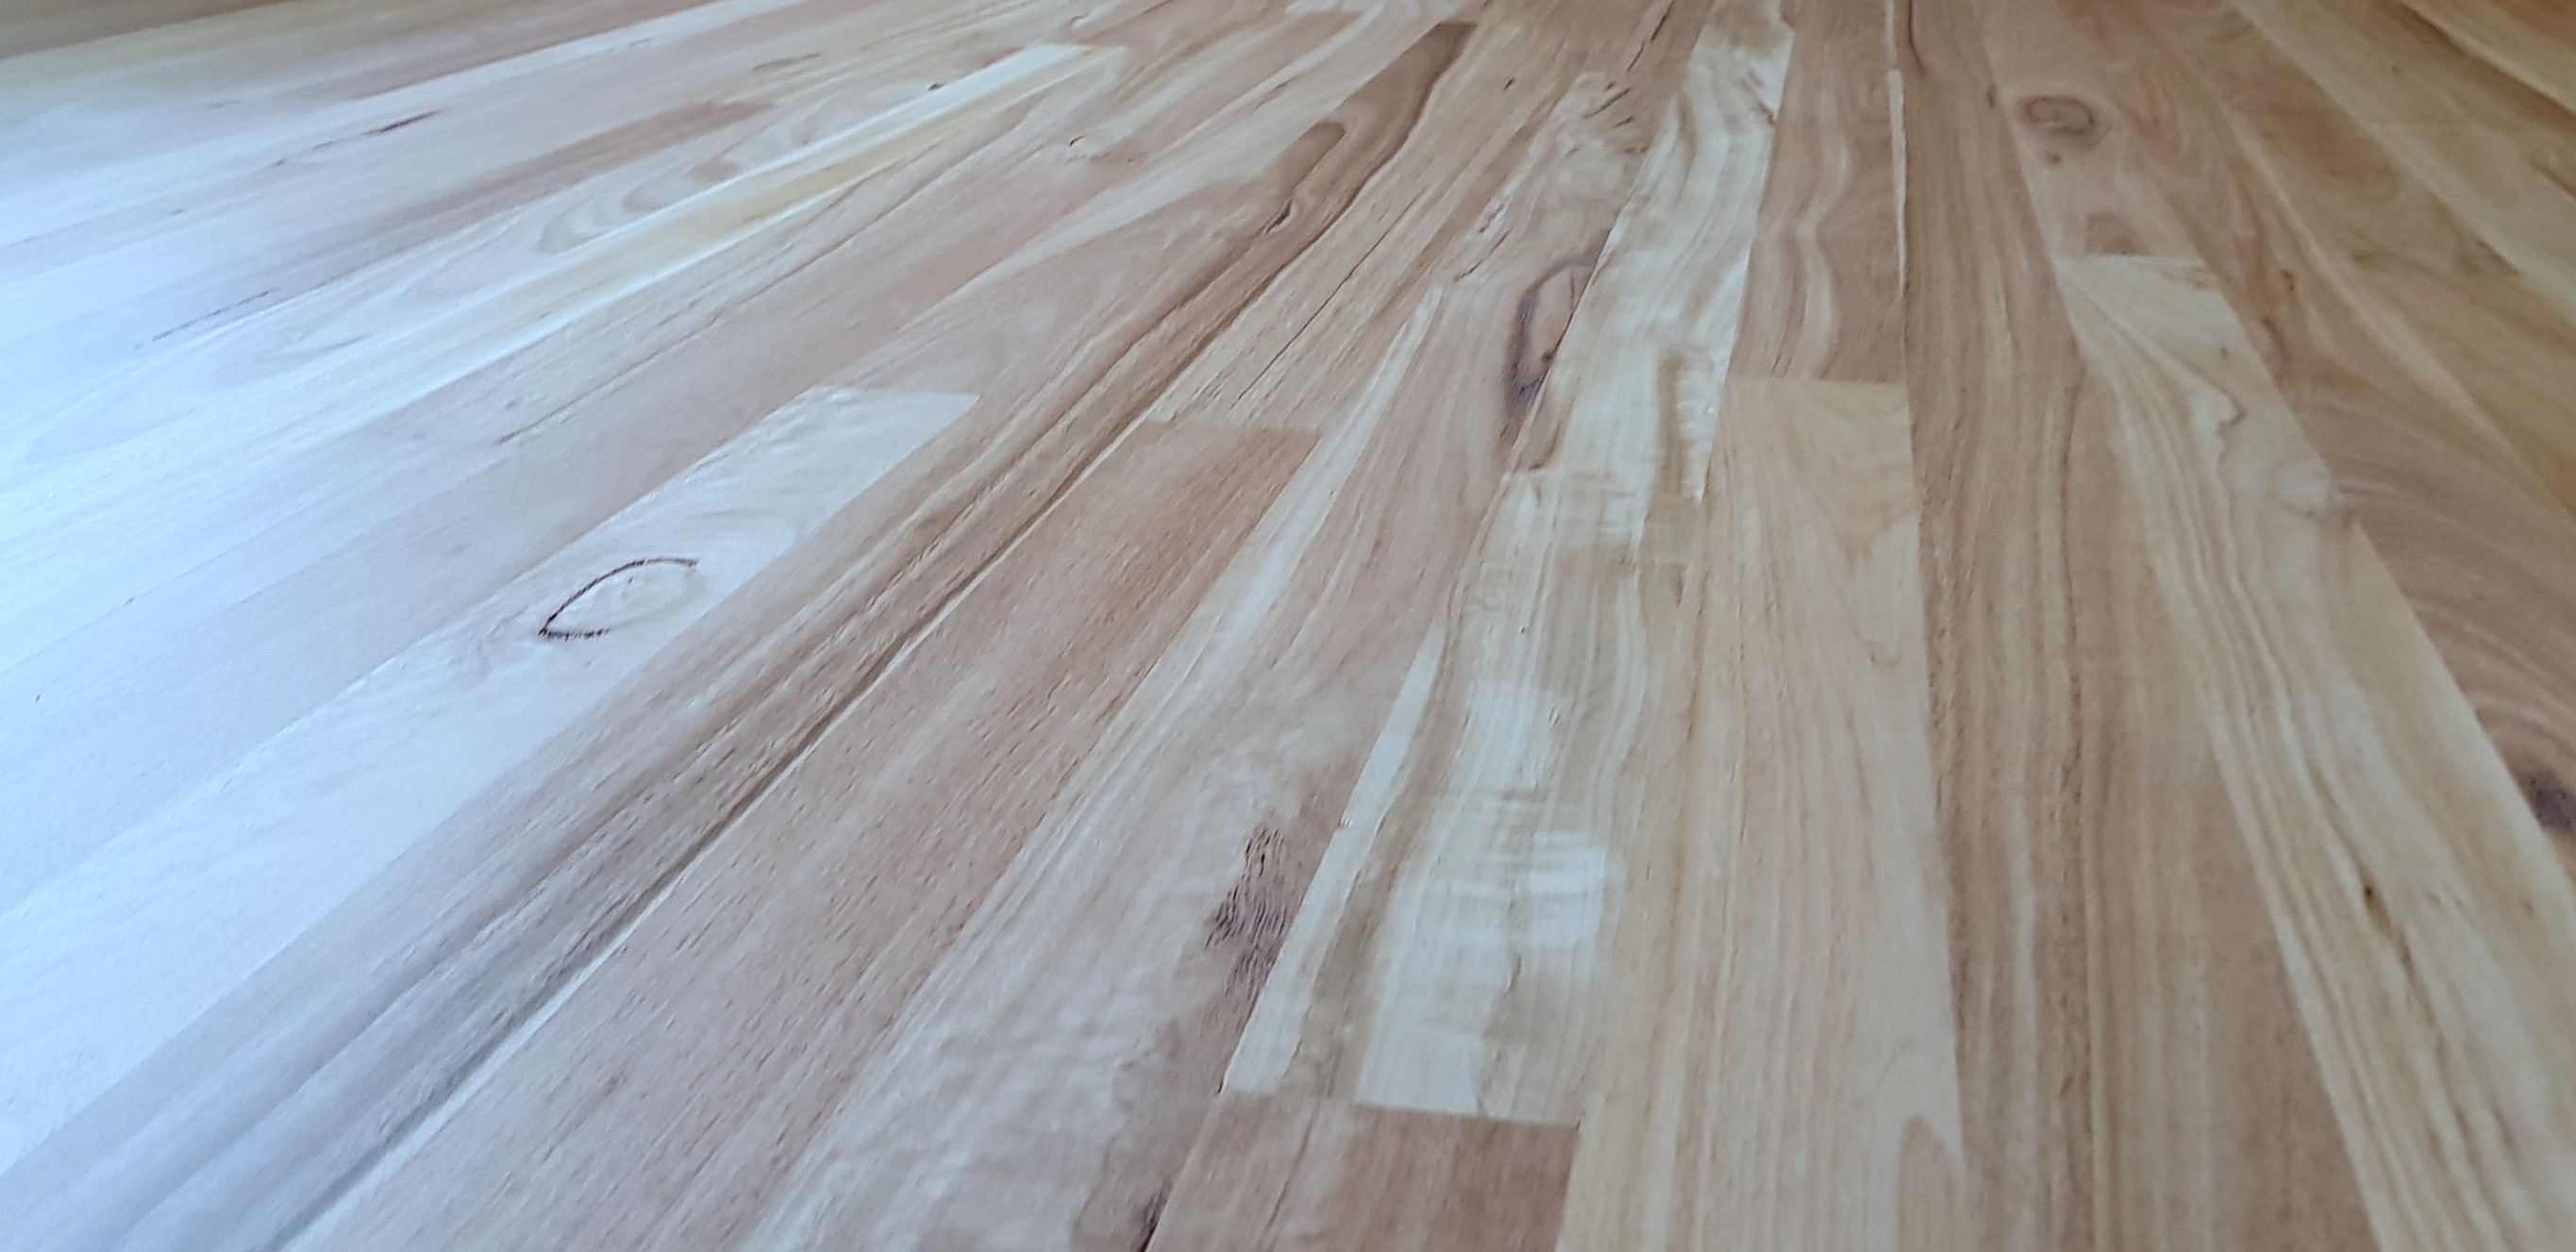 Contact Us - Get Wood Flooring